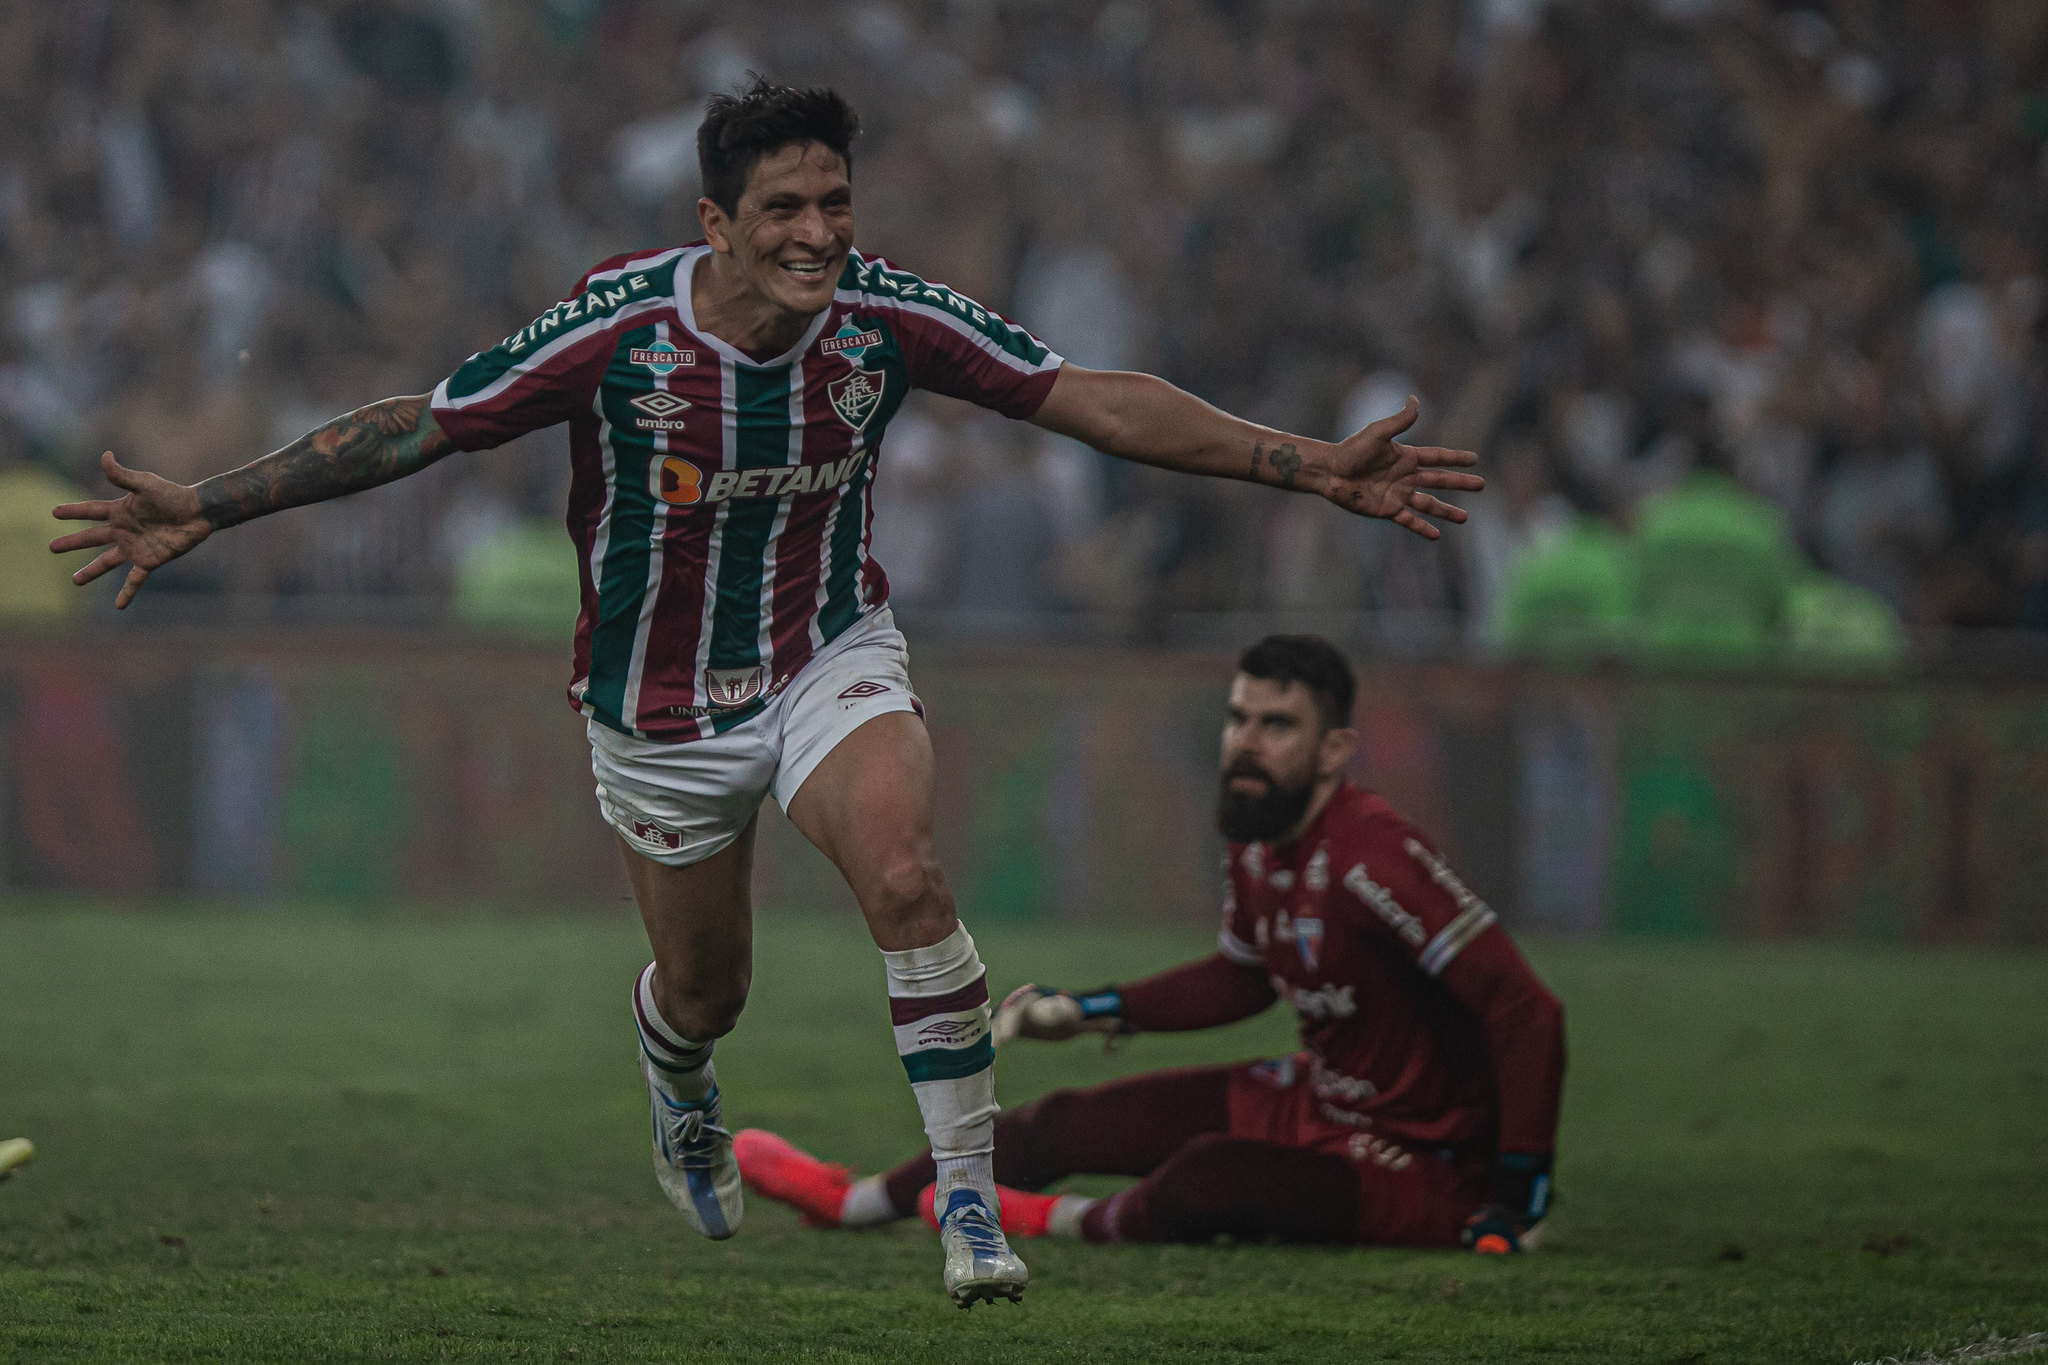 Alysa Gap Anal - Fortaleza assusta, mas Fluminense empata e se classifica